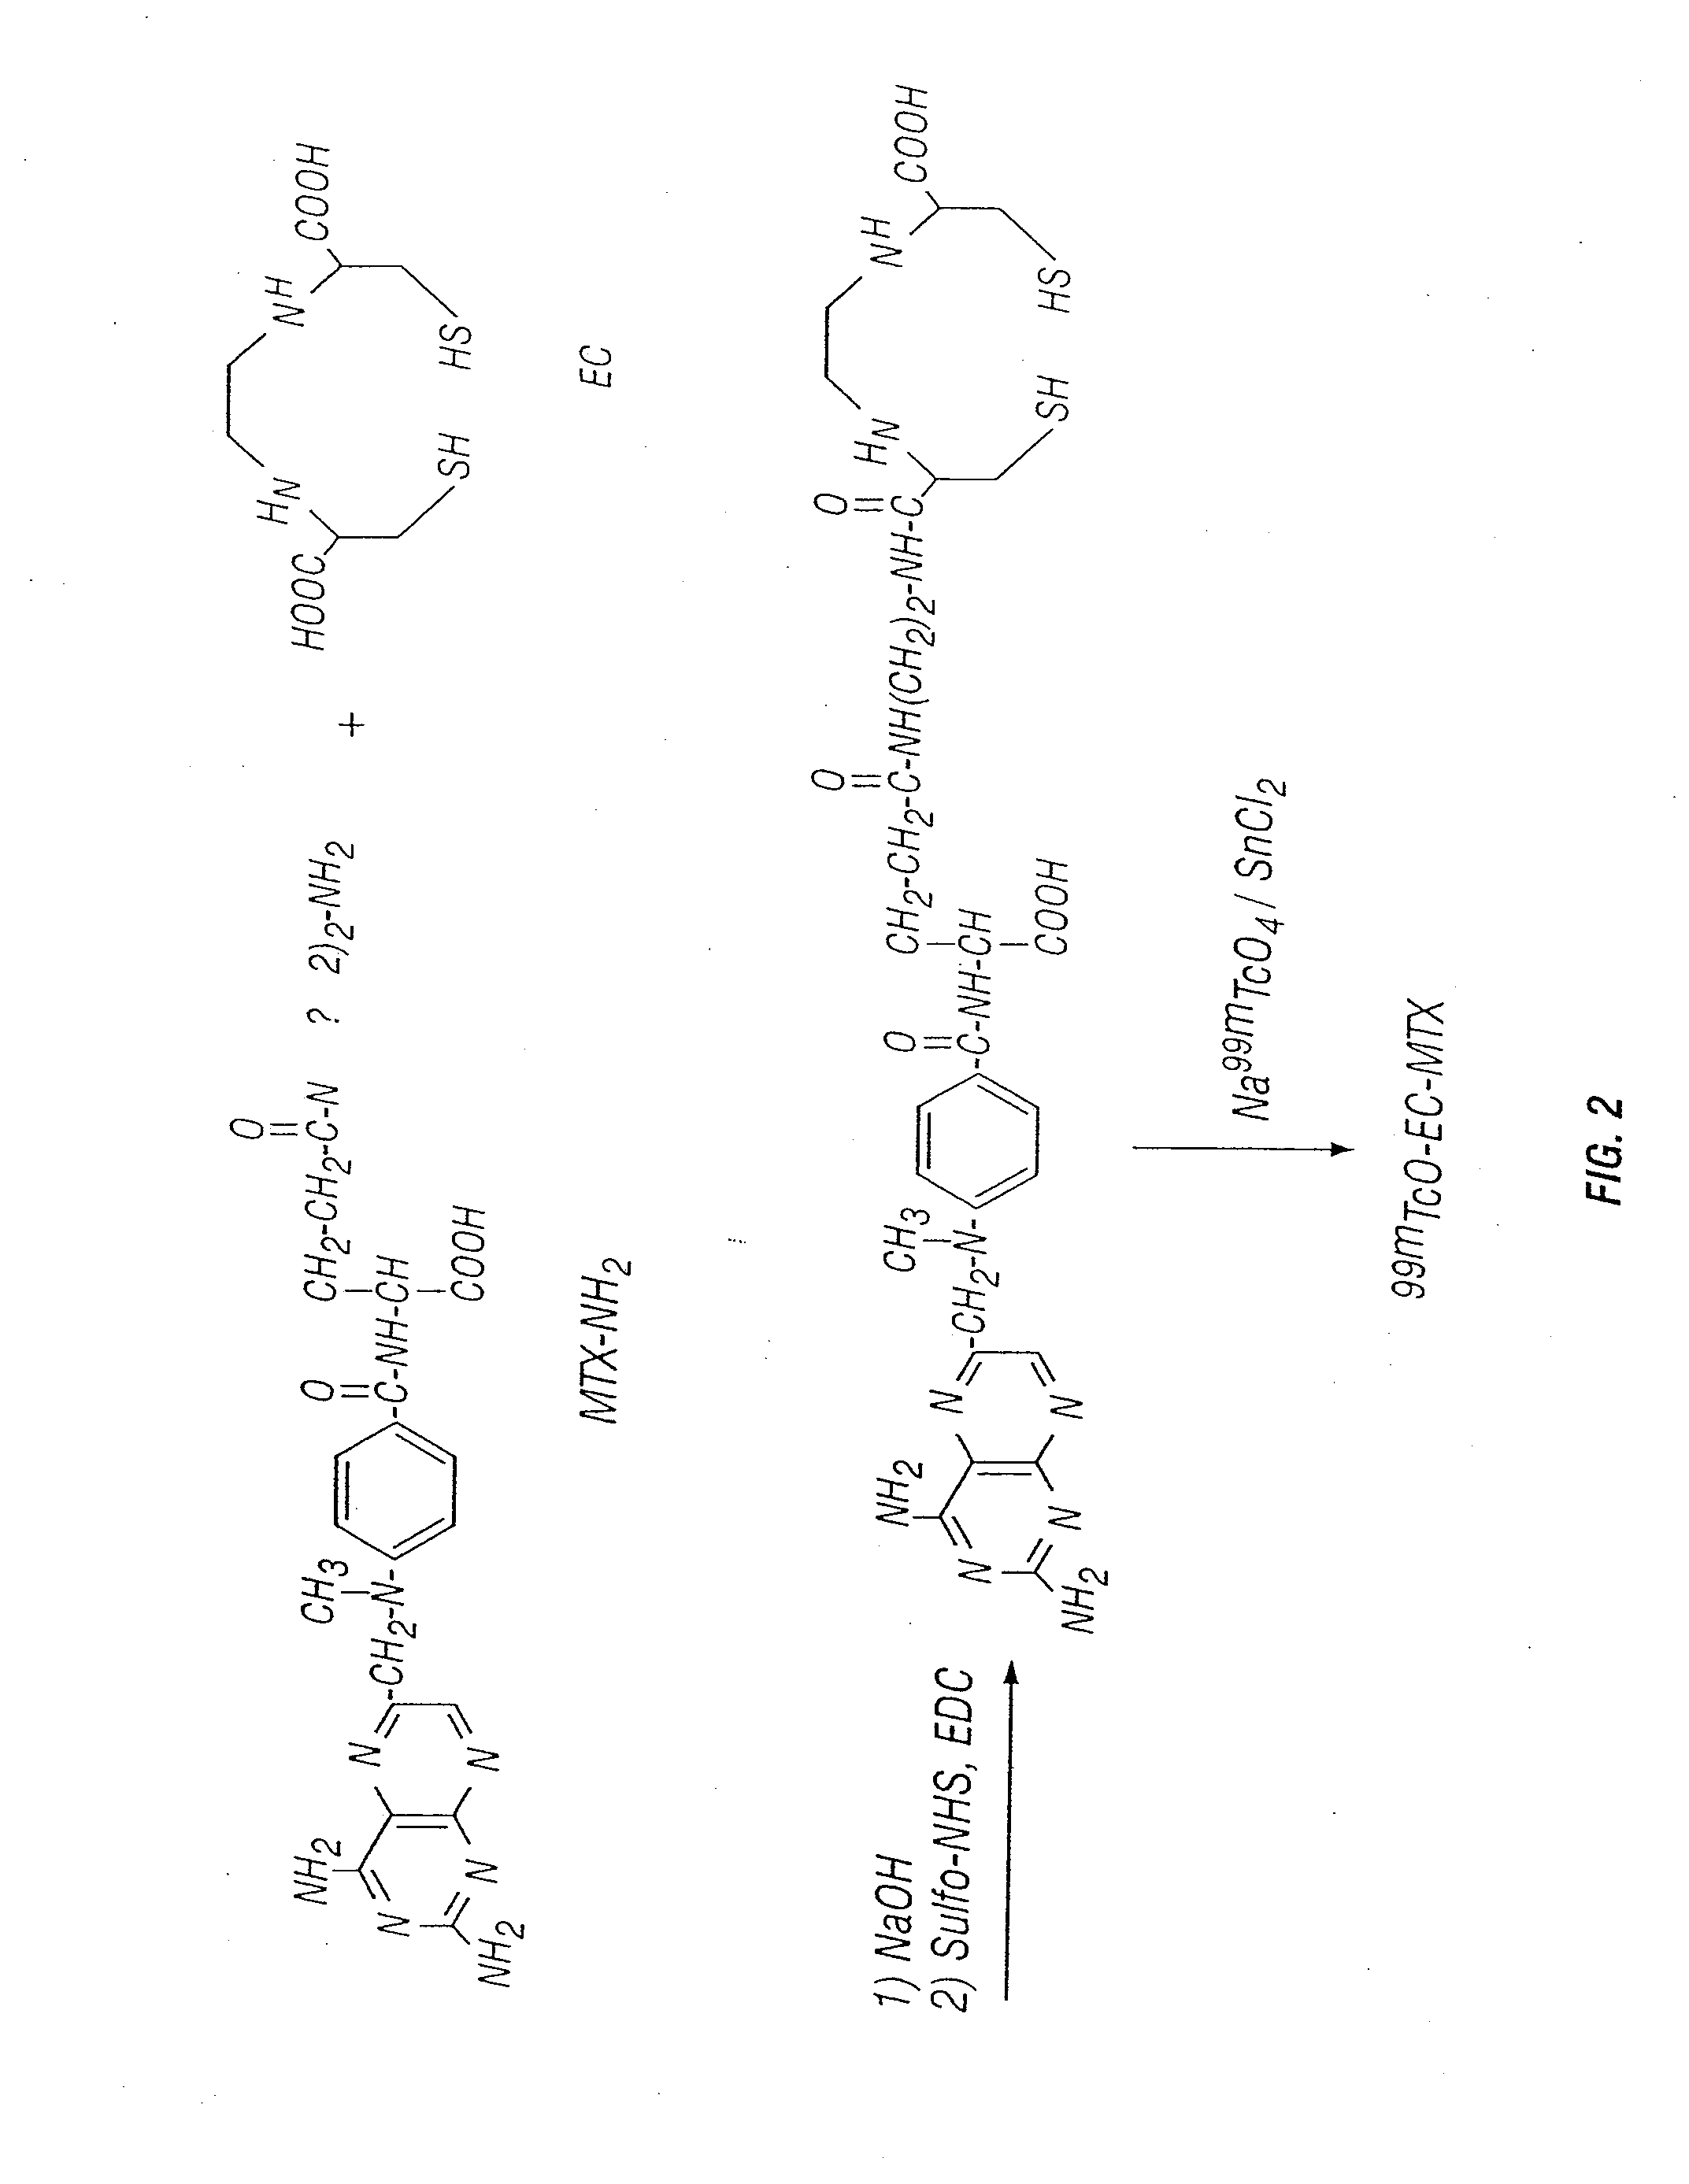 Bisaminoethanethiol-targeting ligand conjugates and compositions